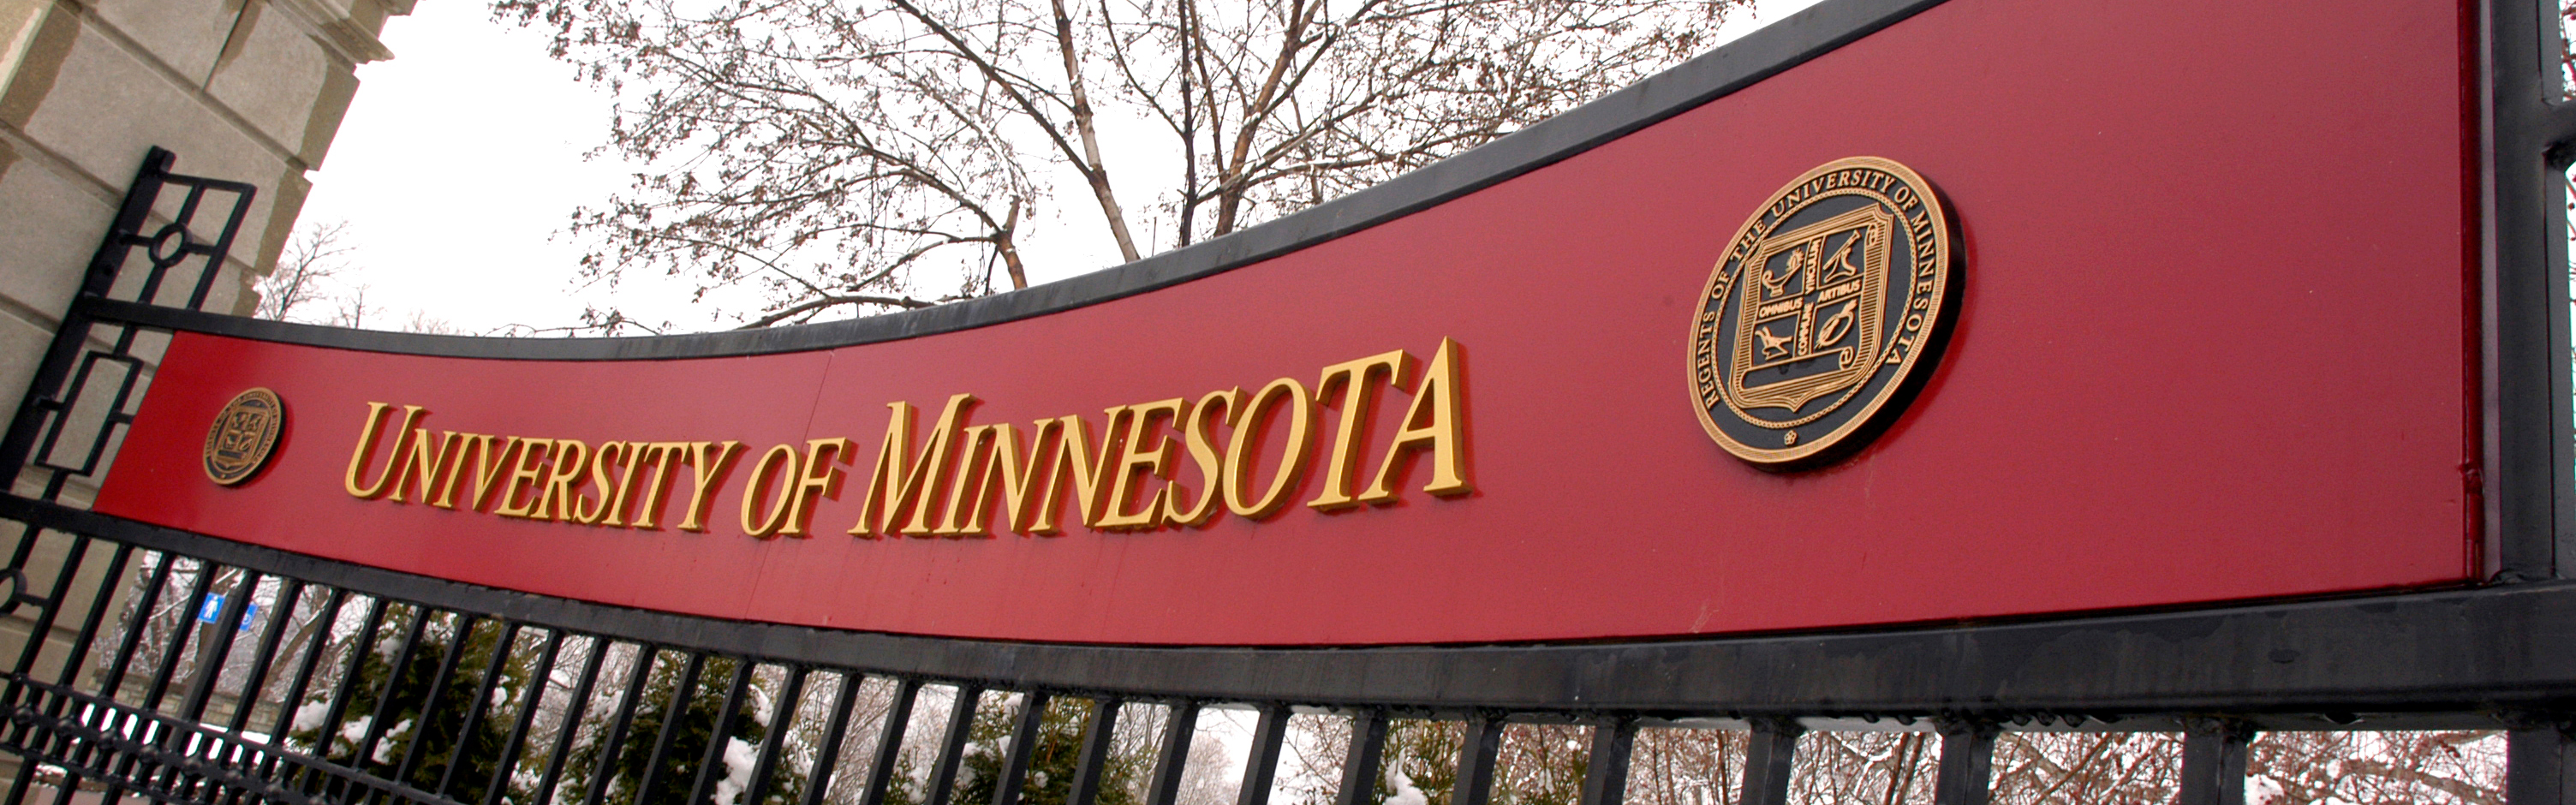 University of Minnesota gate